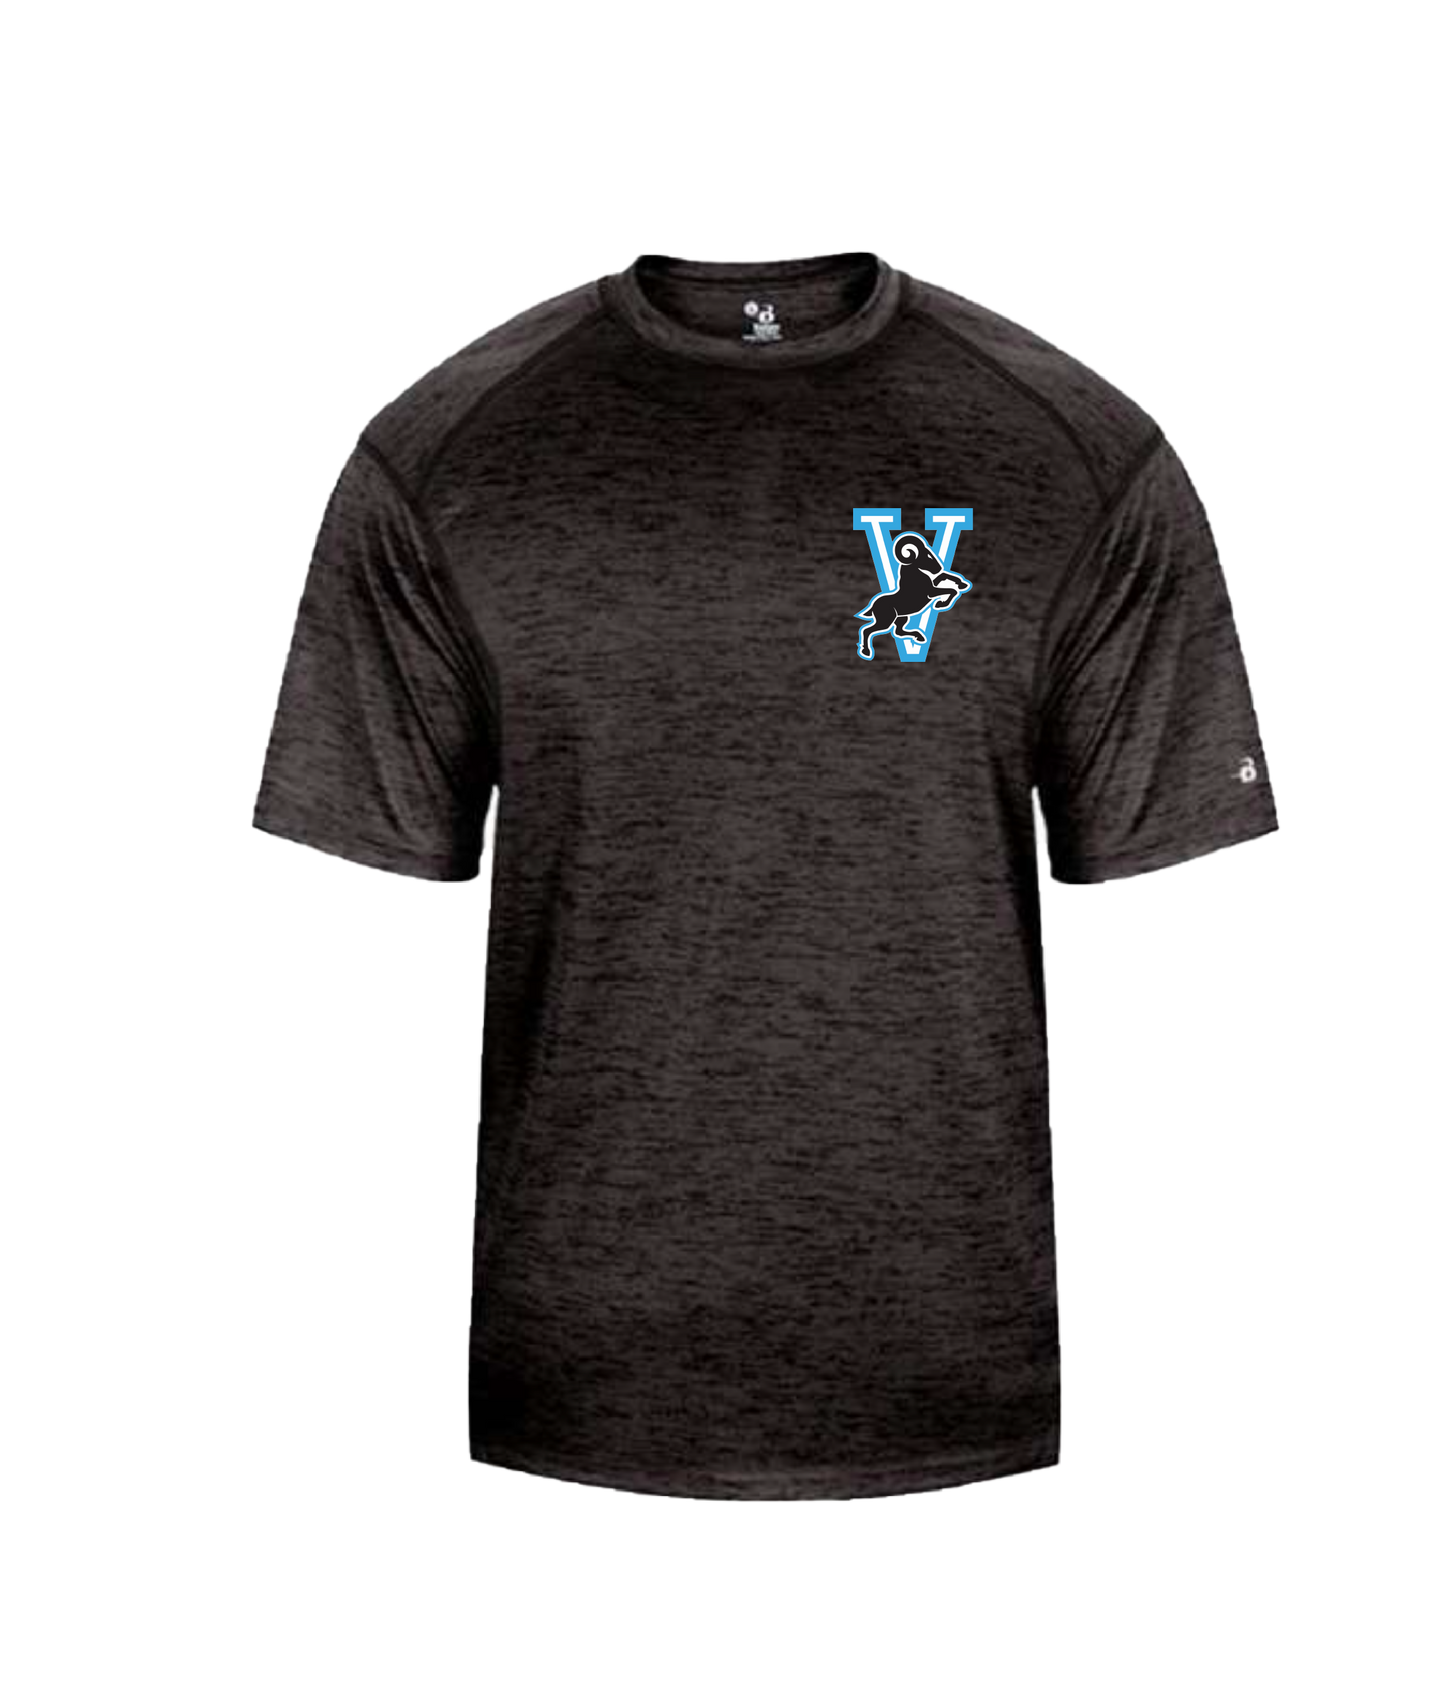 Dri-fit t-shirts - Athletic V logo